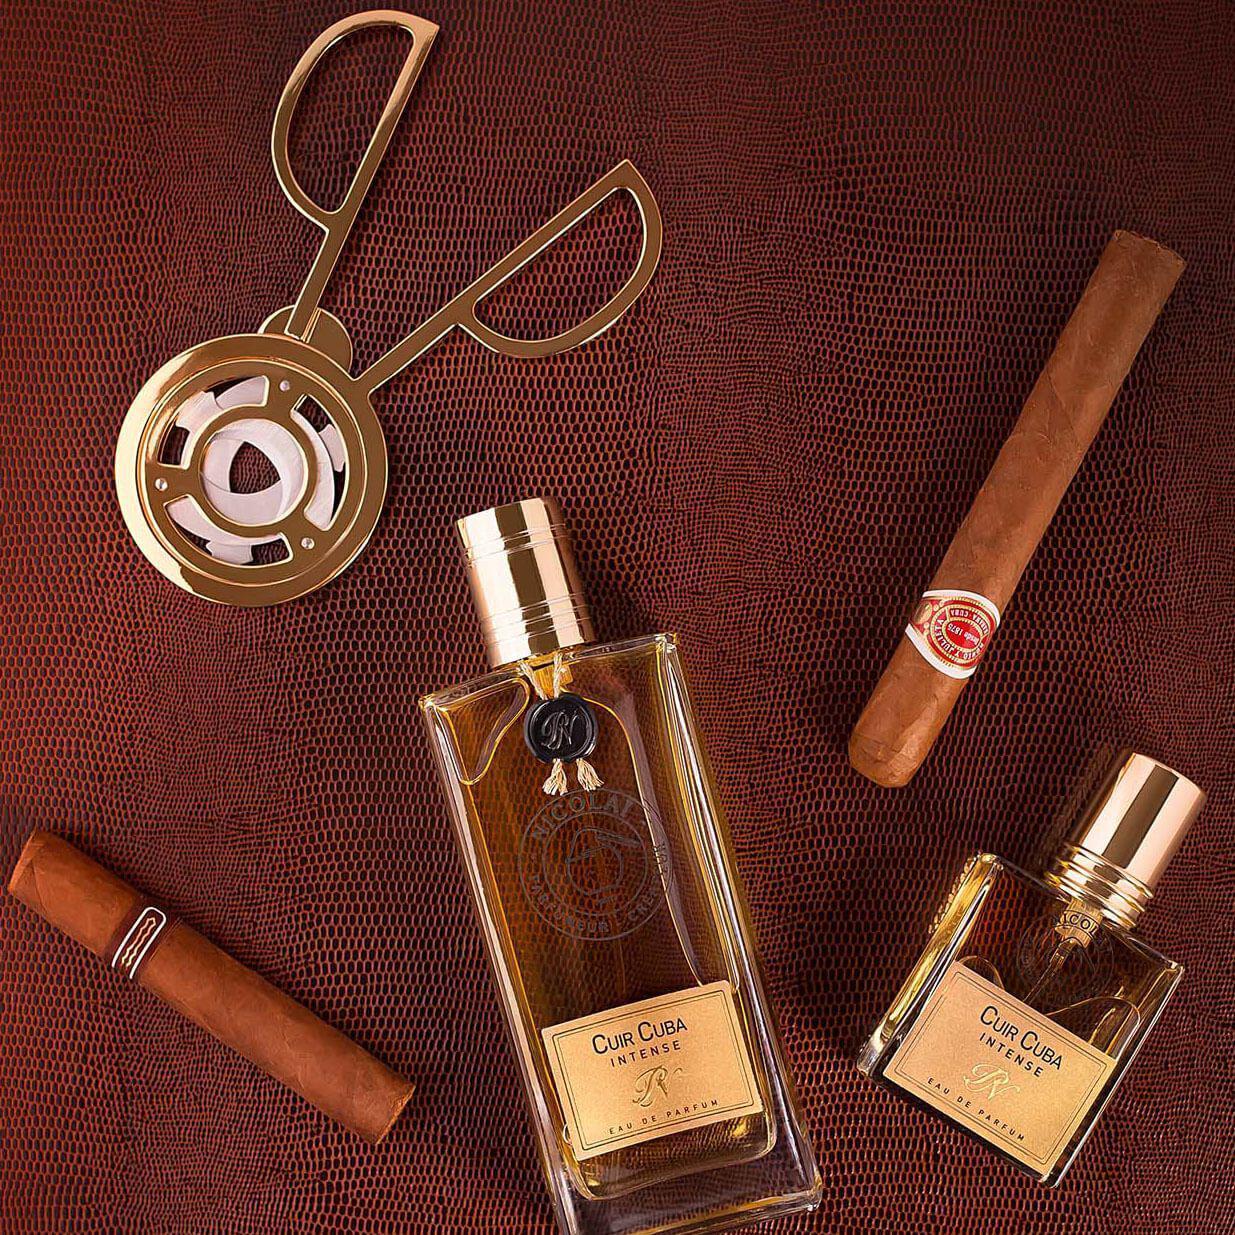 Cuir Cuba Intense-eau de parfum-Nicolai Paris-Perfume Lounge